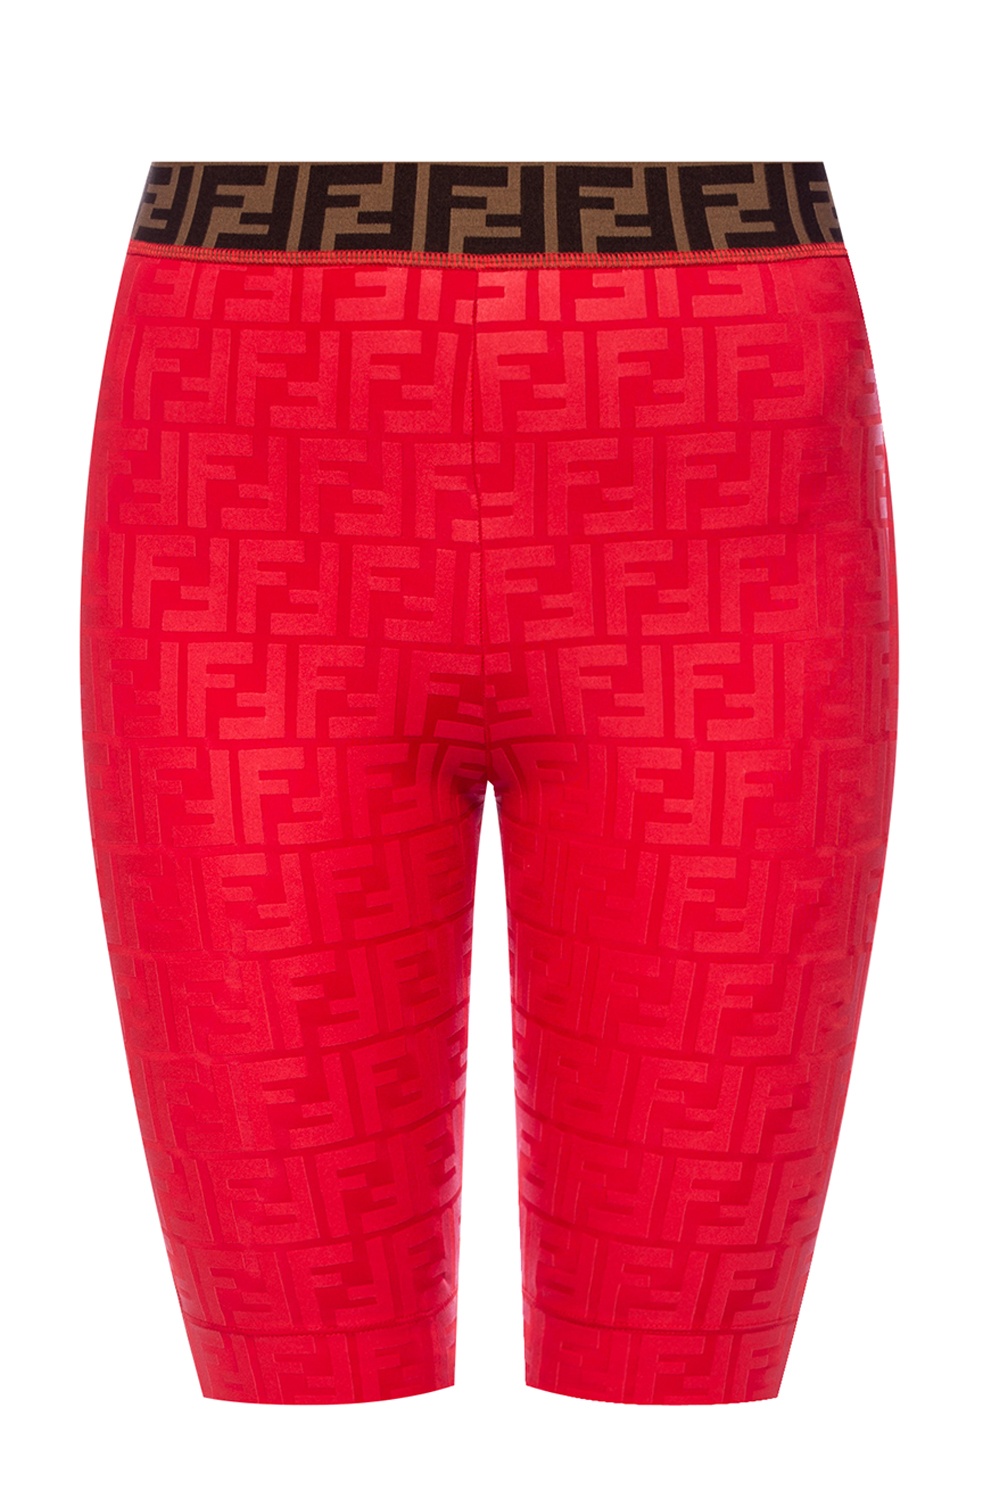 red fendi tights